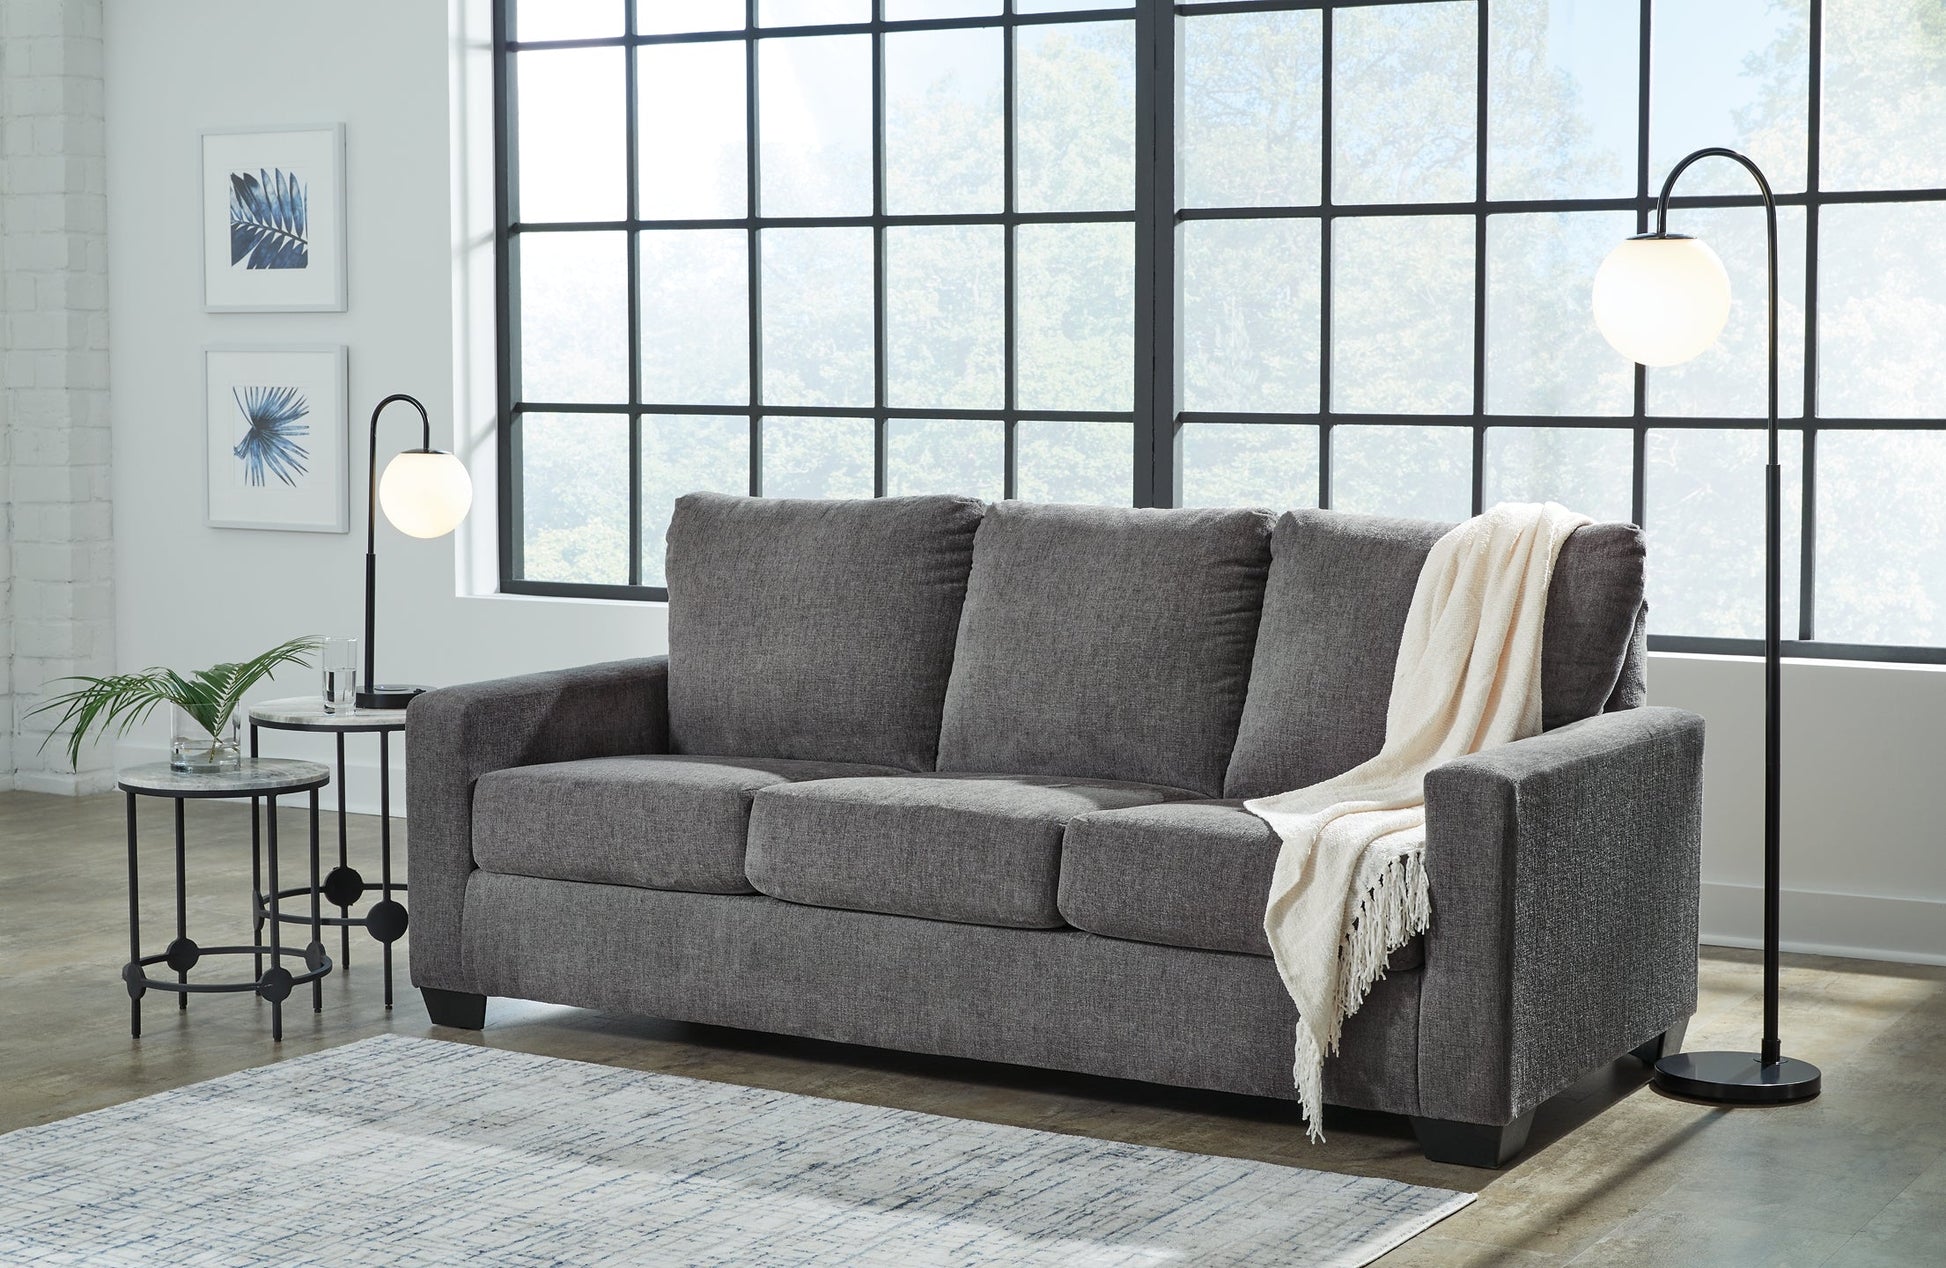 Rannis Queen Sofa Sleeper at Cloud 9 Mattress & Furniture furniture, home furnishing, home decor